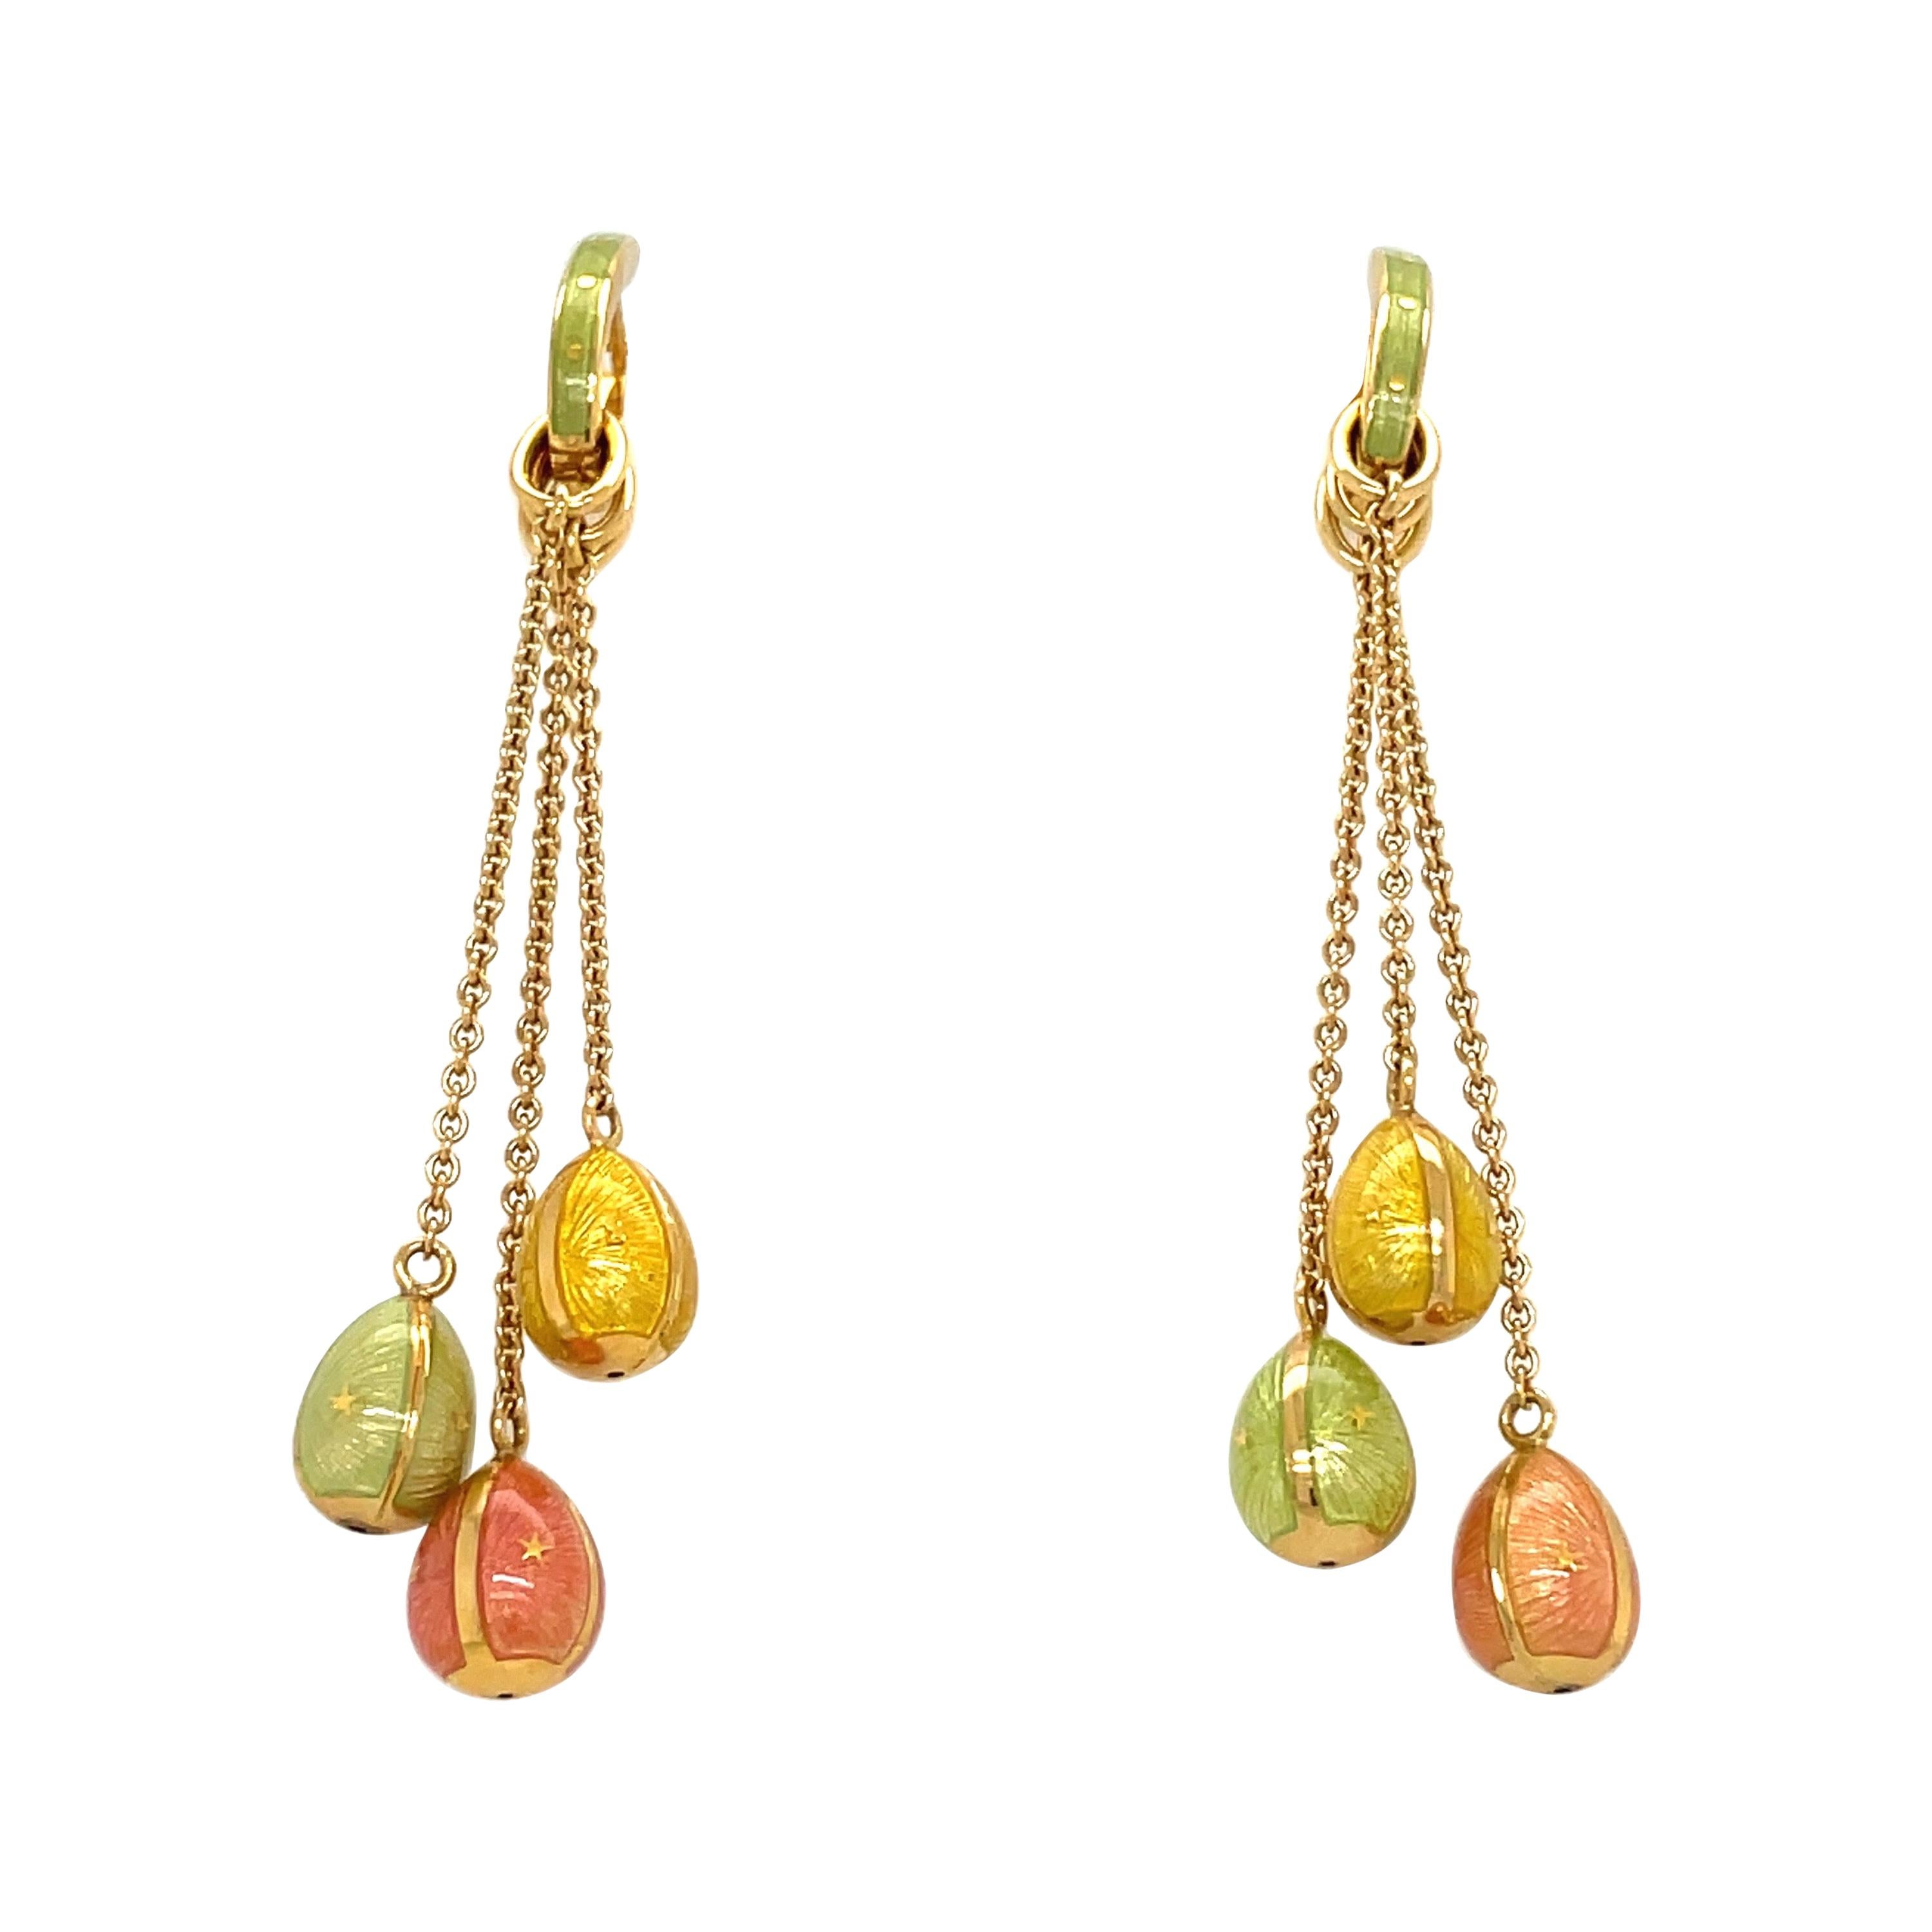 Faberge 18kt Yellow Gold & Peach, Green & Yellow Enamel Hanging Eggs Earrings